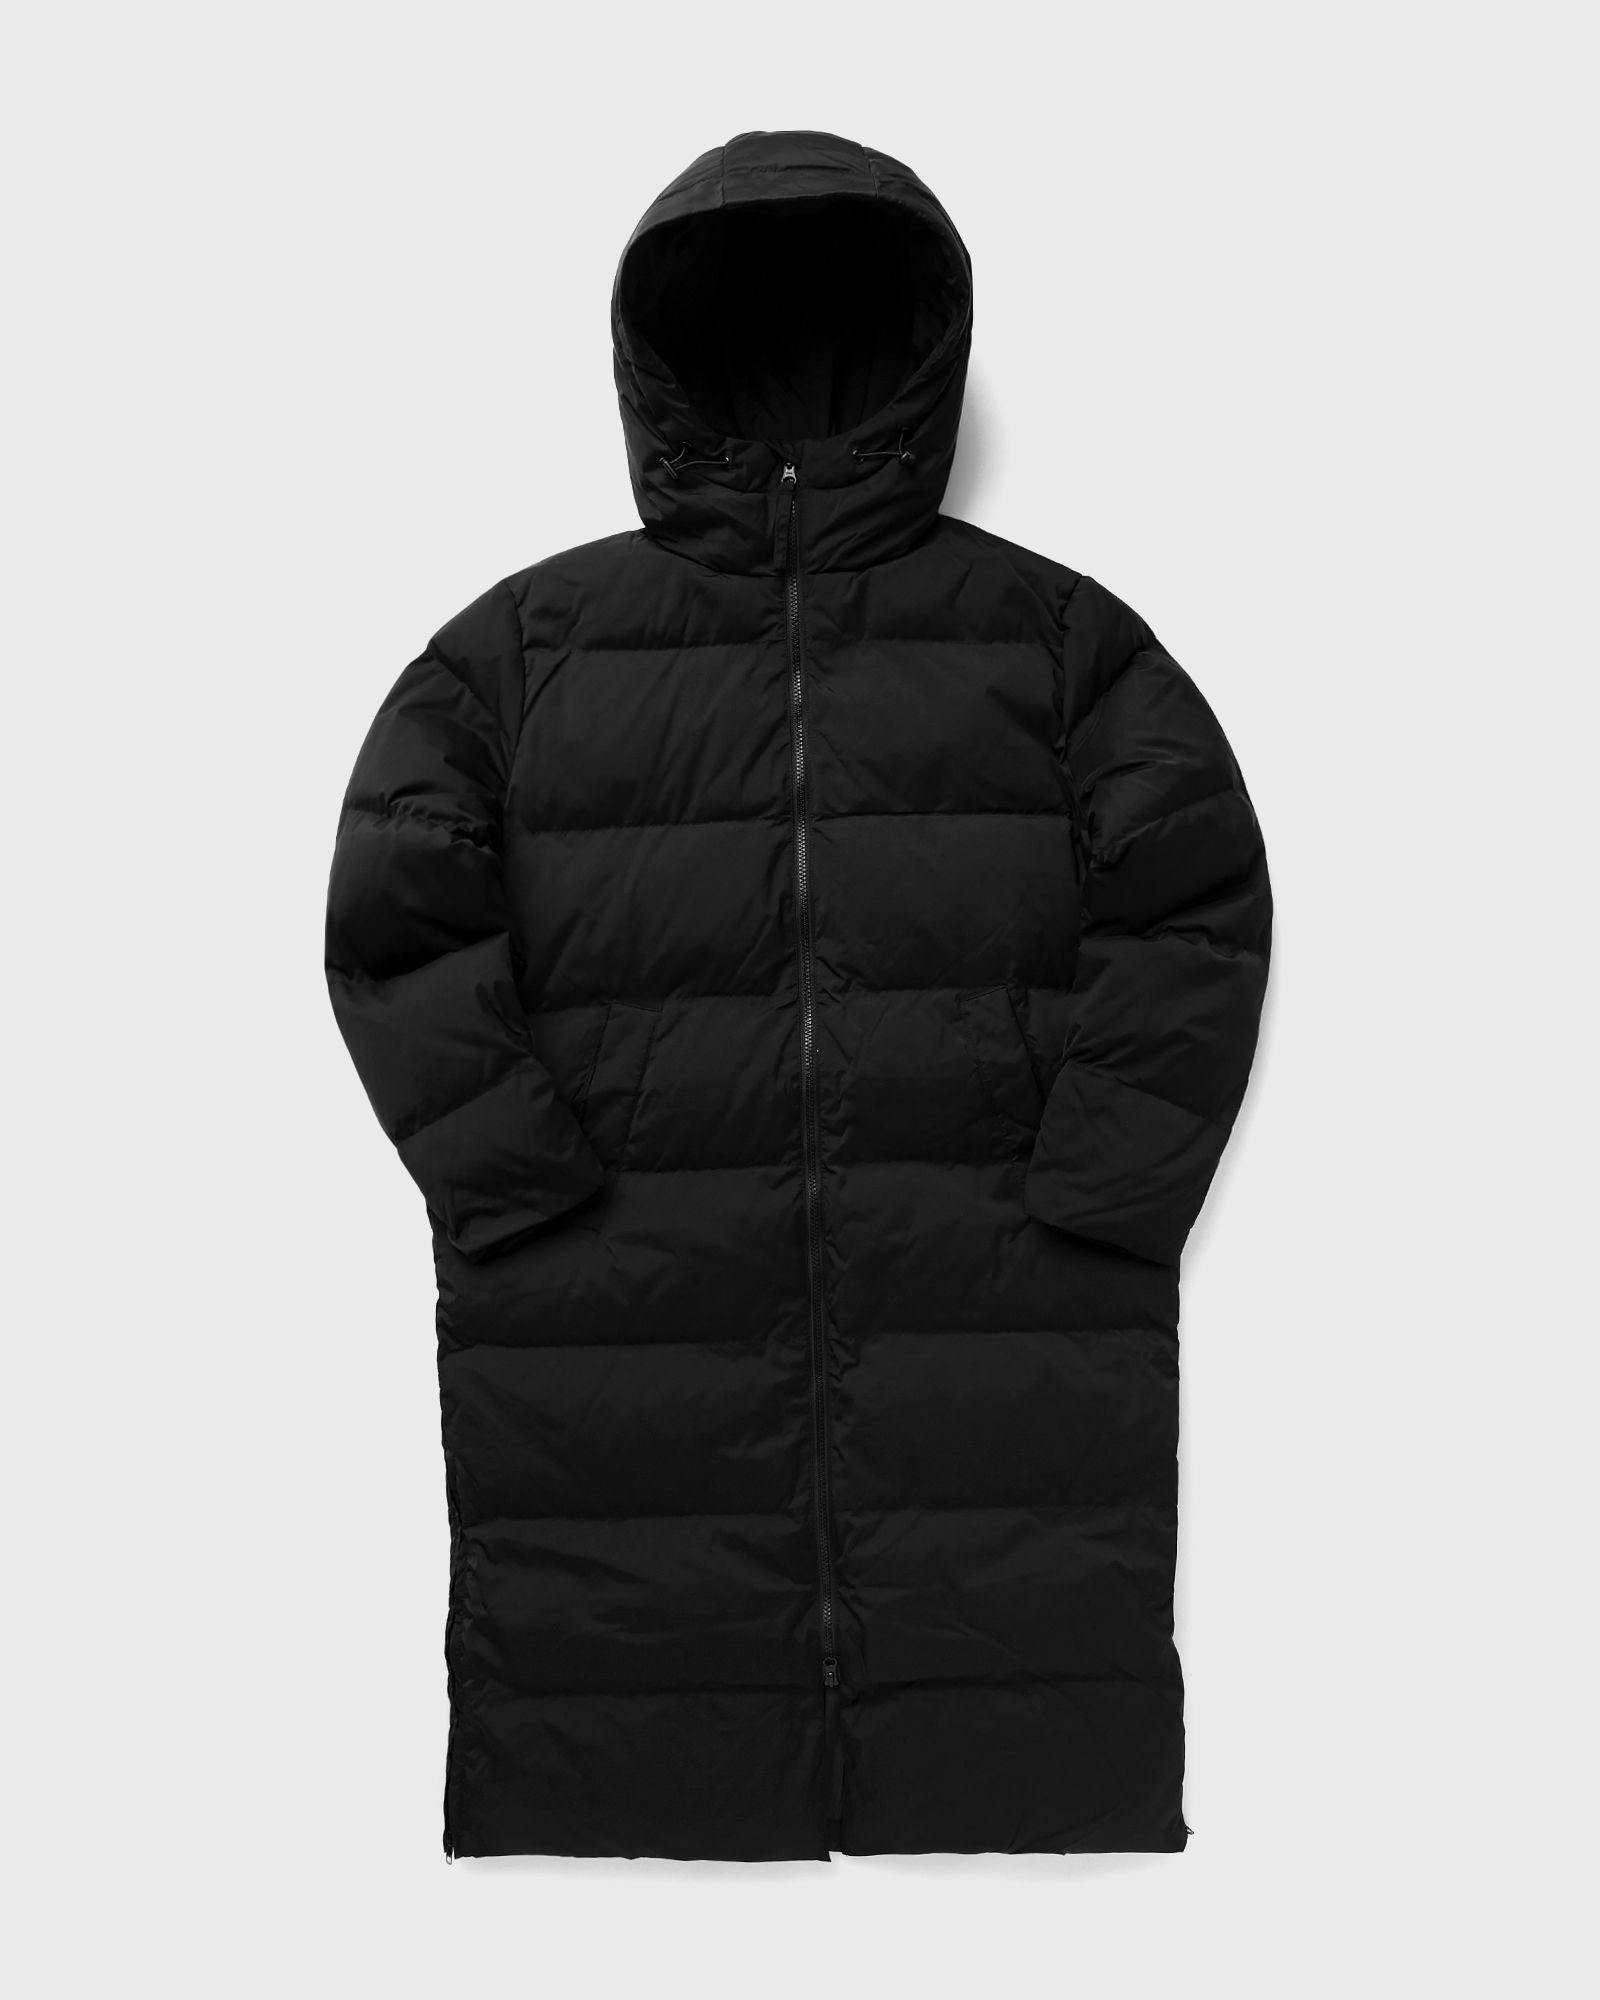 Samsøe & Samsøe - sera coat women down & puffer jackets|parkas black in größe:l